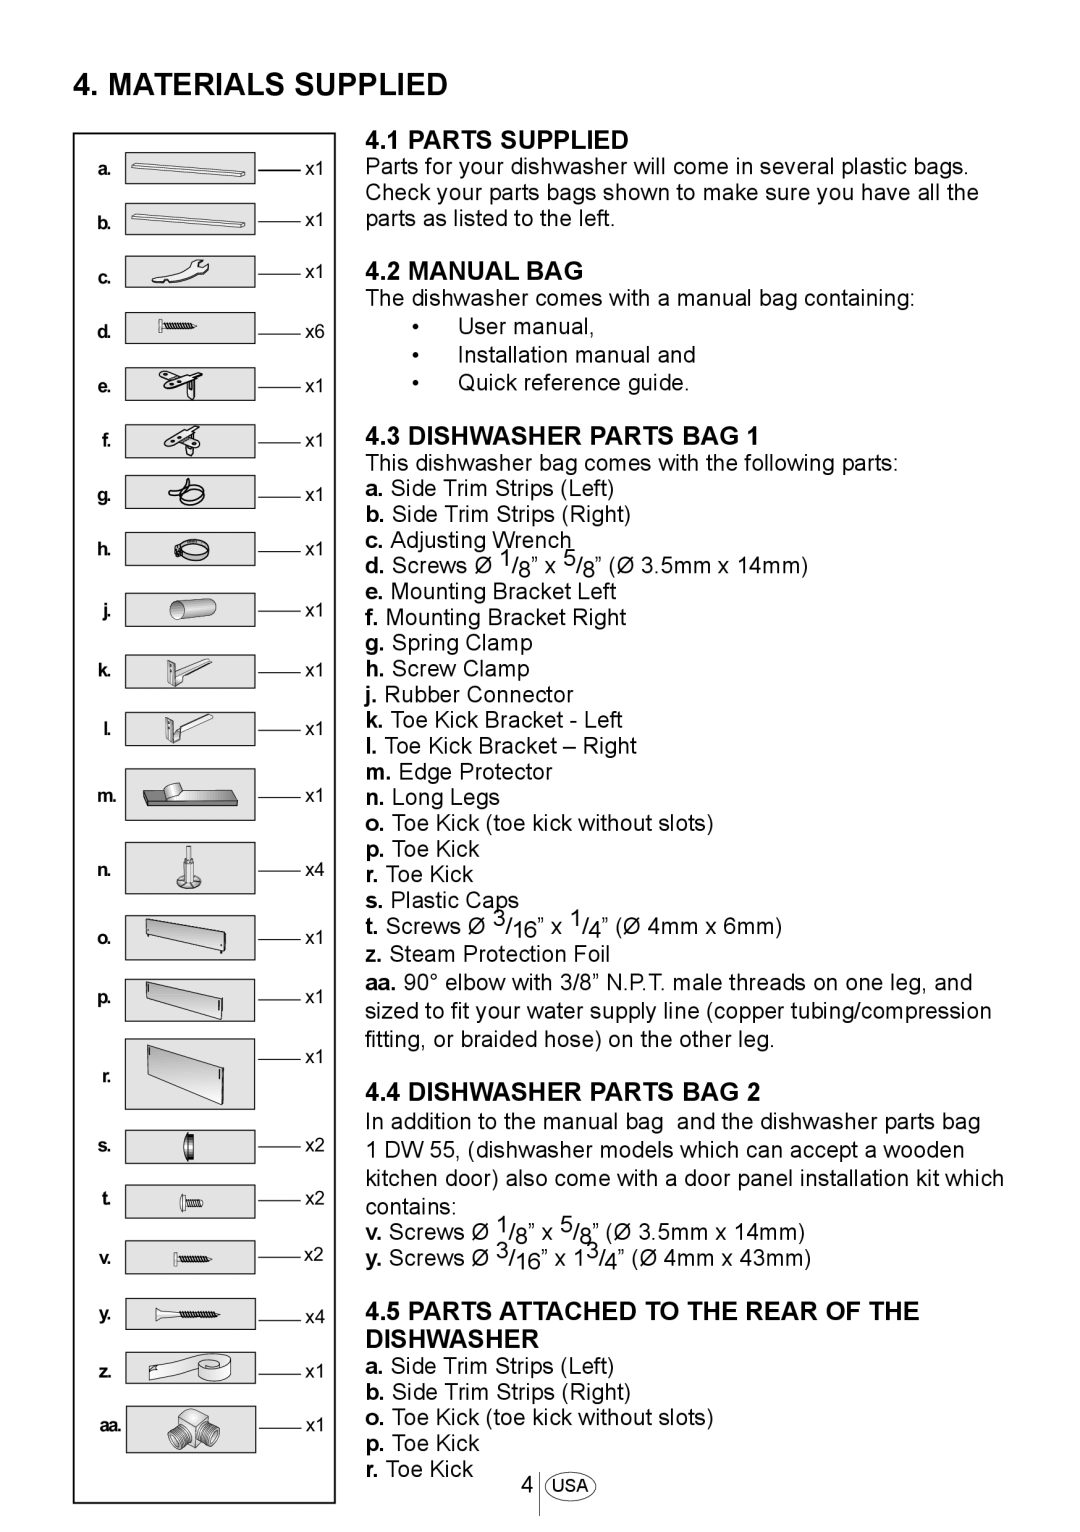 Blomberg DWS 54100 FBI, DWS 54100 SS Materials Supplied, Parts Supplied, Manual Bag, Dishwasher Parts Bag 